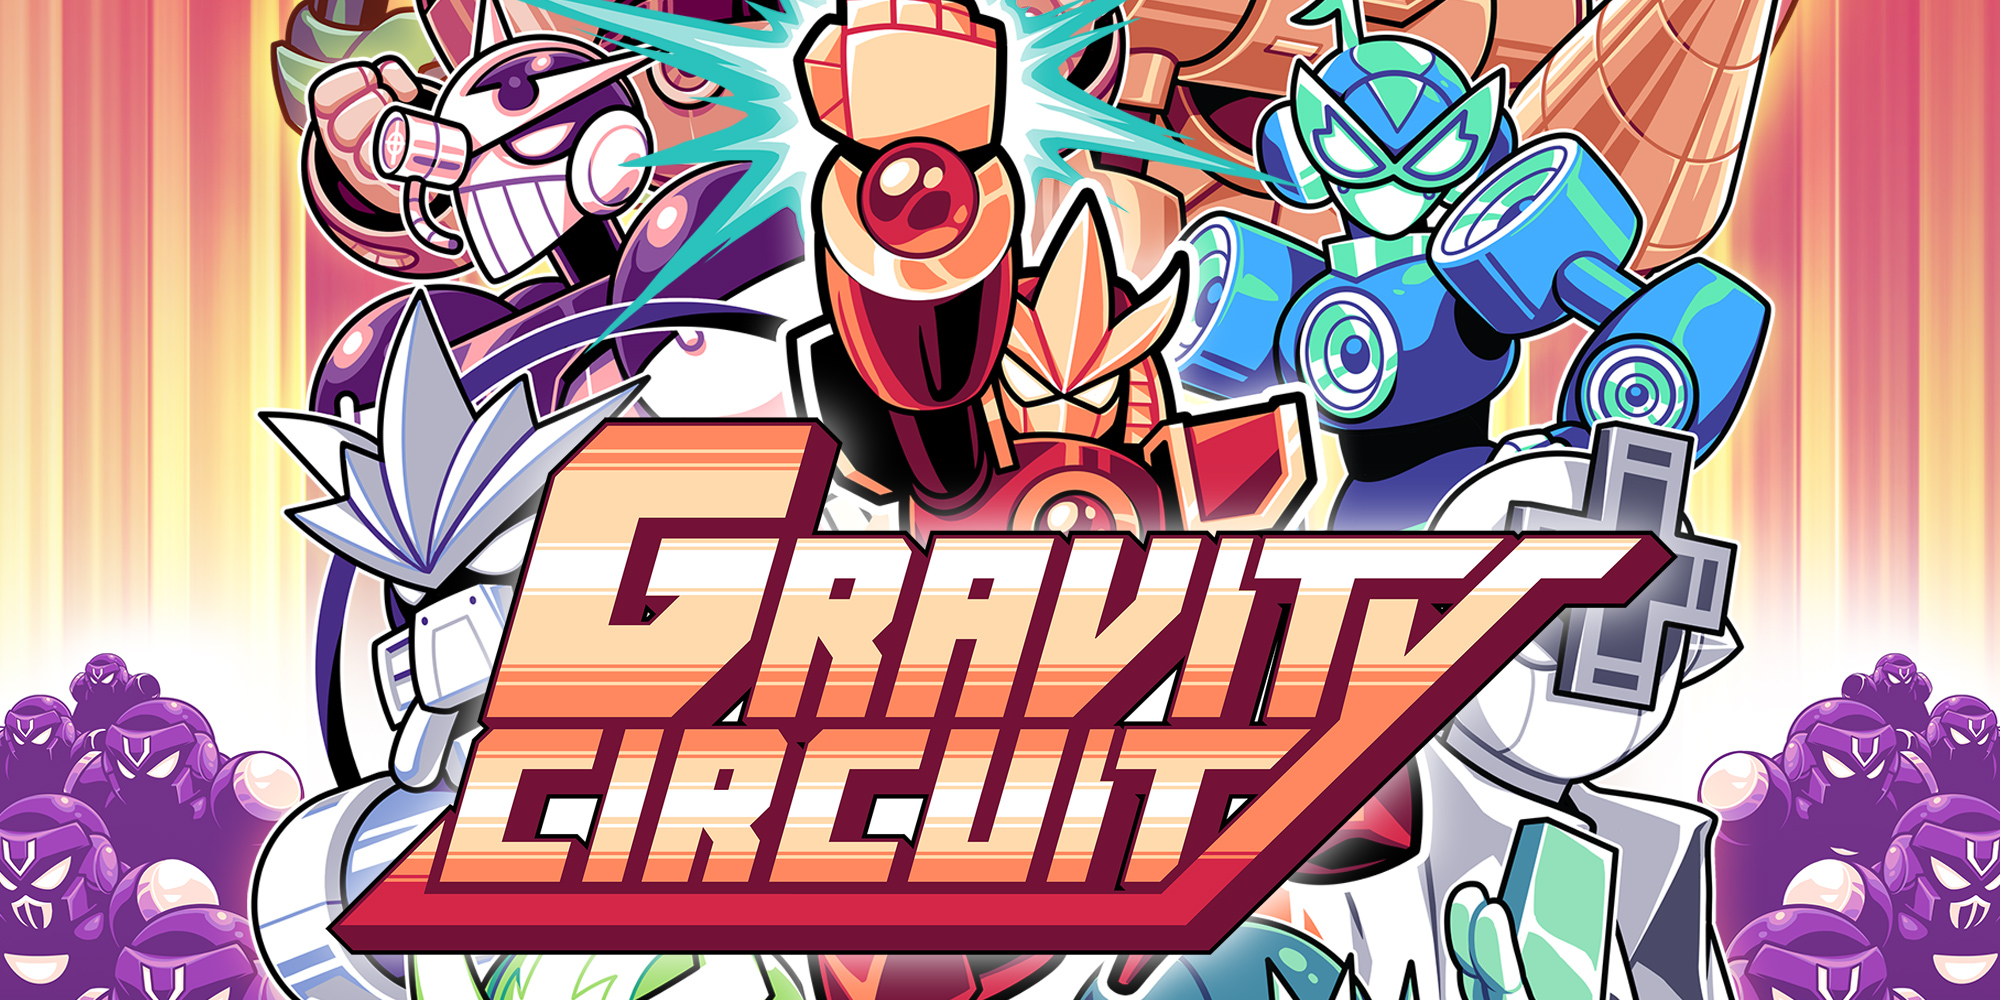 Gravity Circuit, Nintendo Switch Game